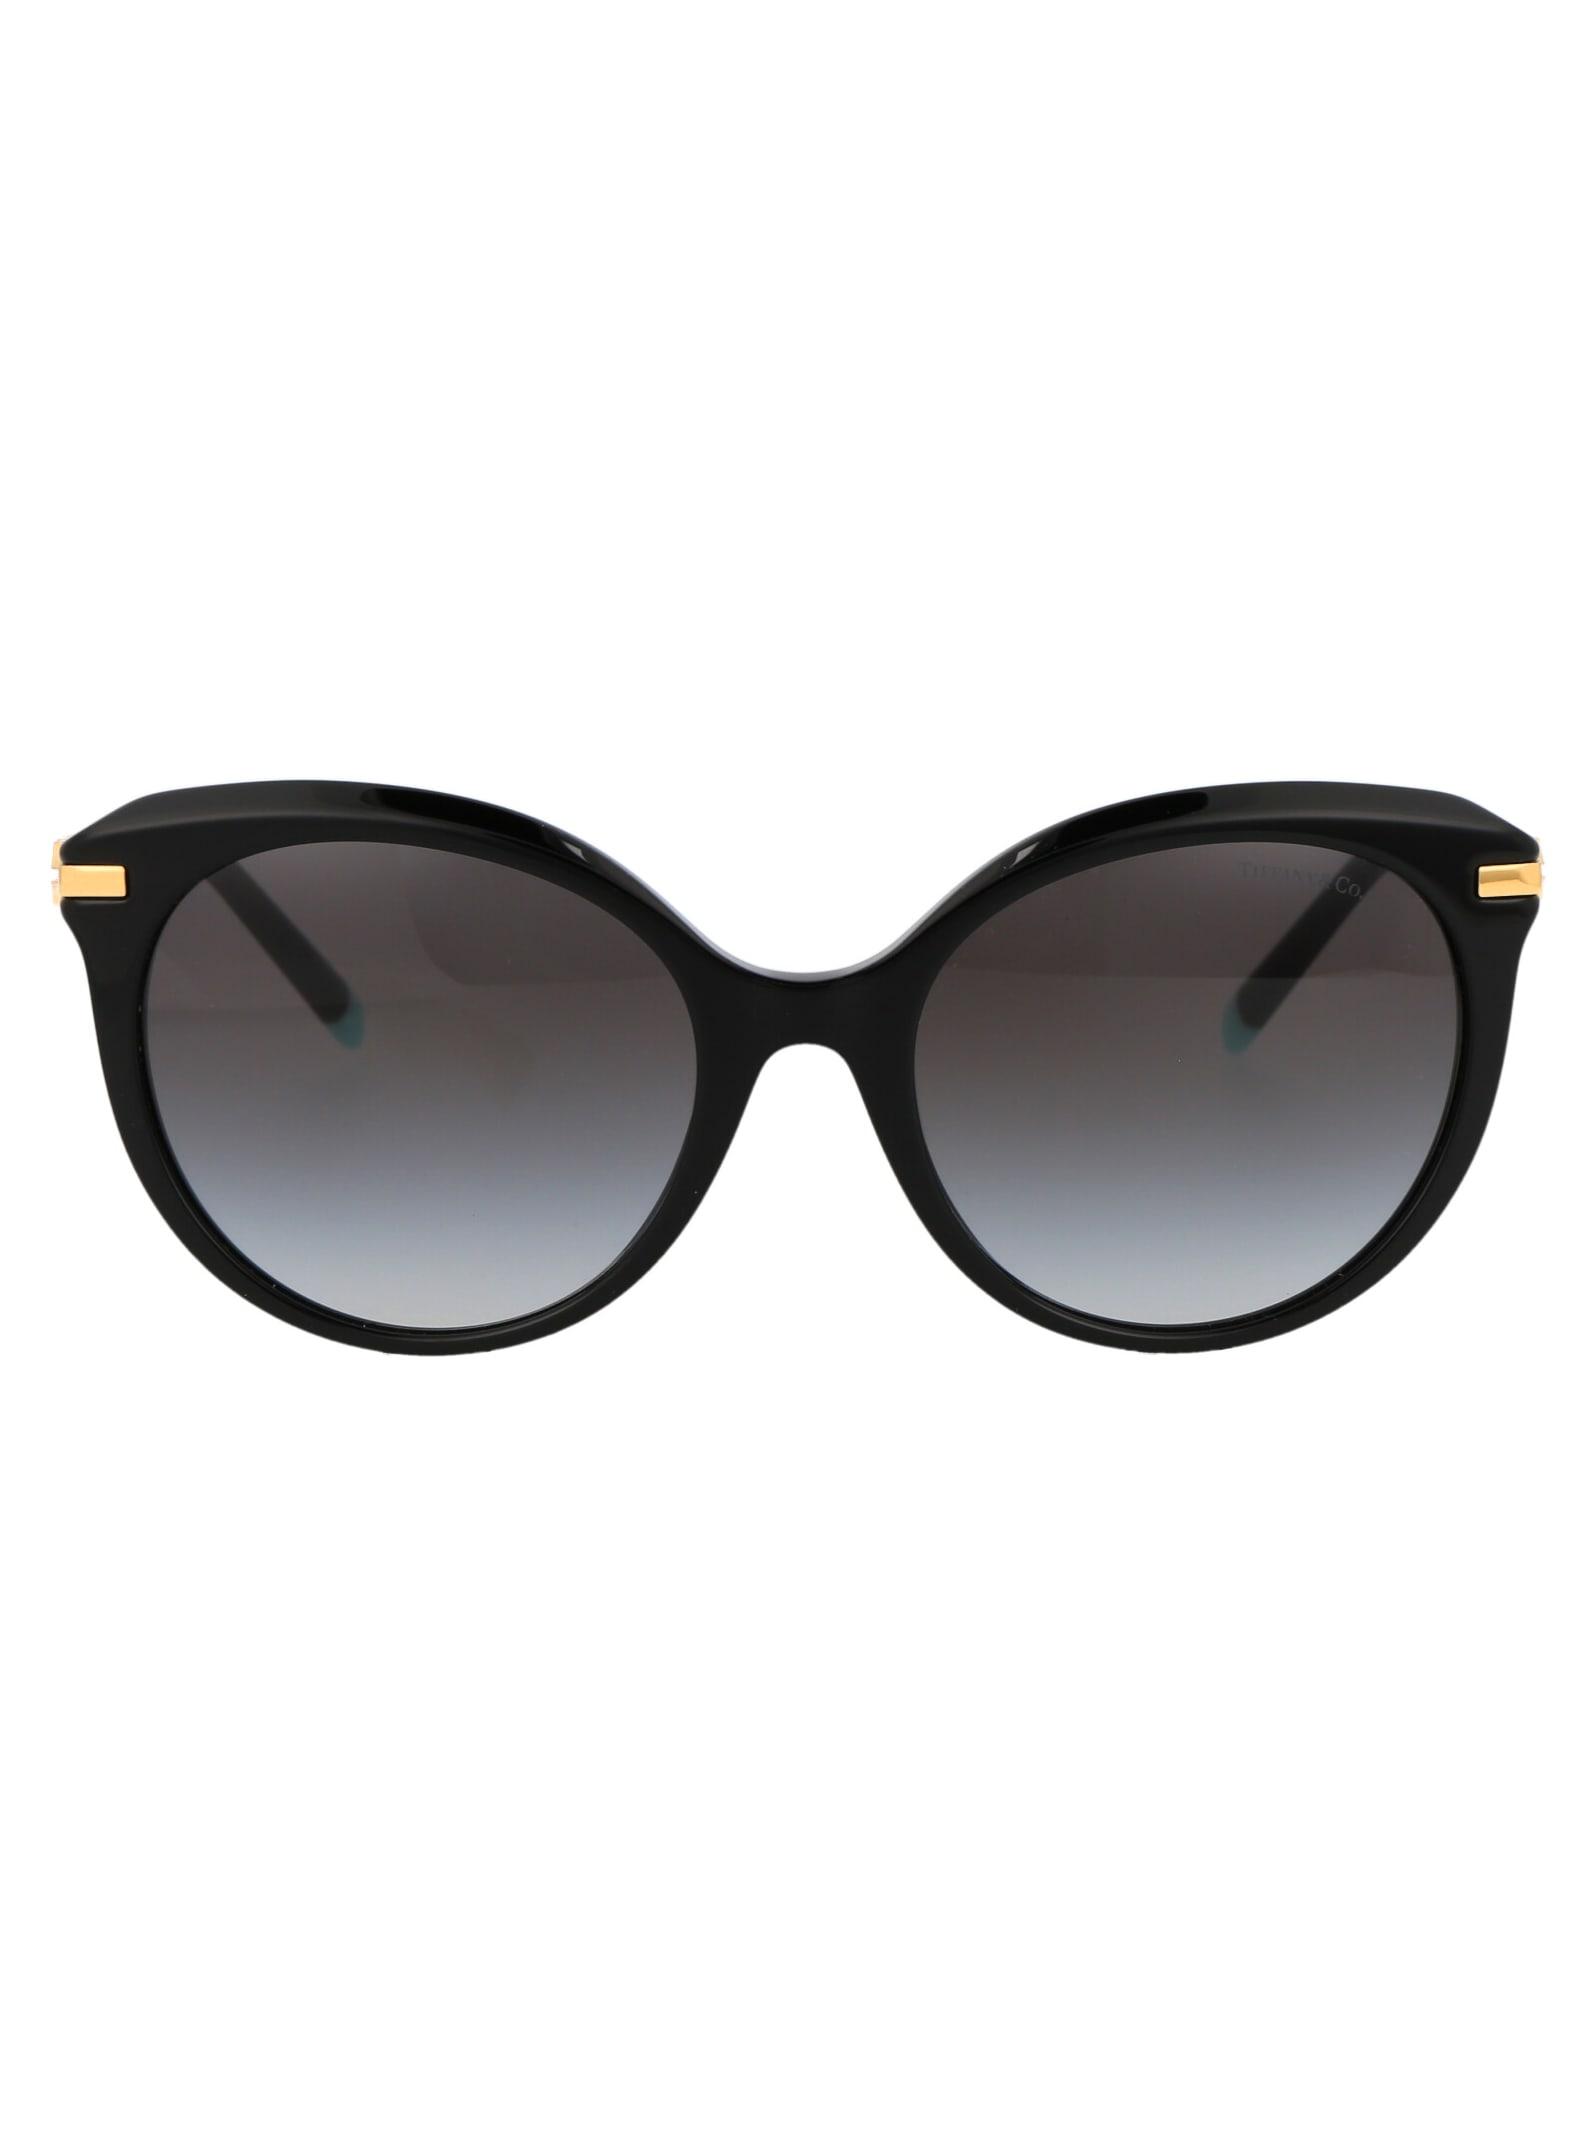 Tiffany & Co. 0tf4189b Sunglasses in Black | Lyst